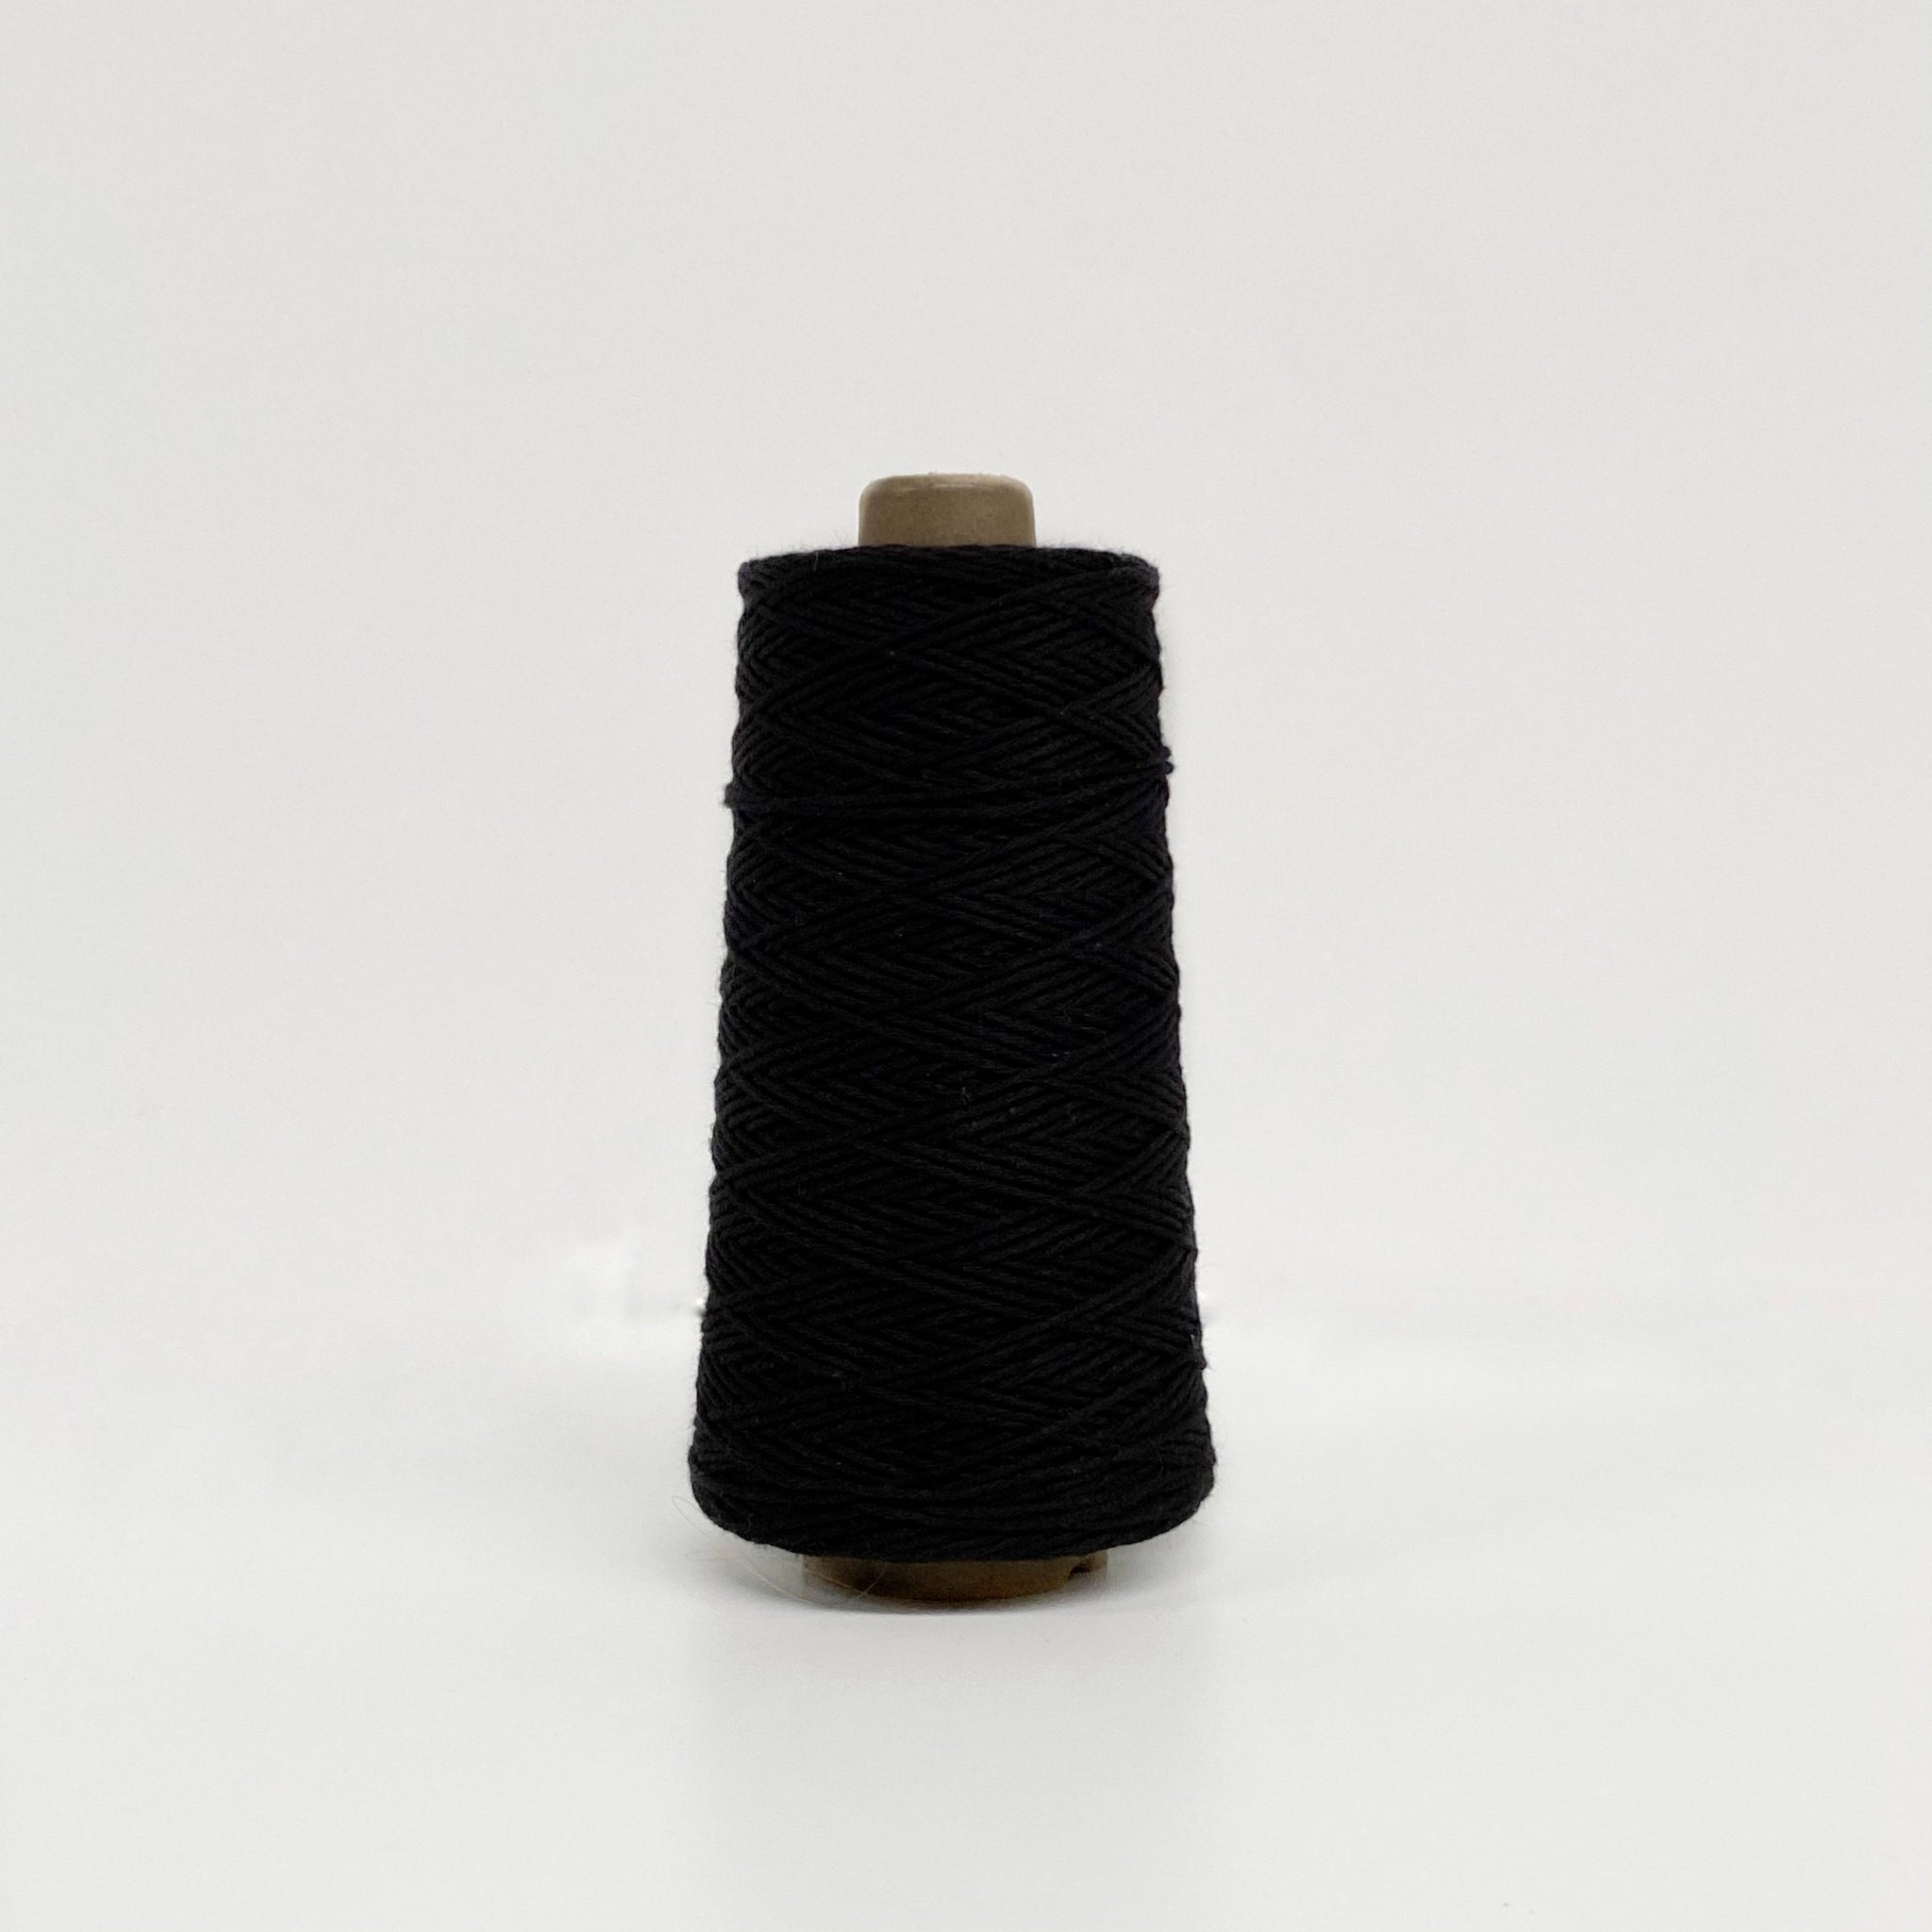 Coloured Cotton Warp | Buy Weaving Supplies Online - Mary Maker Studio ...